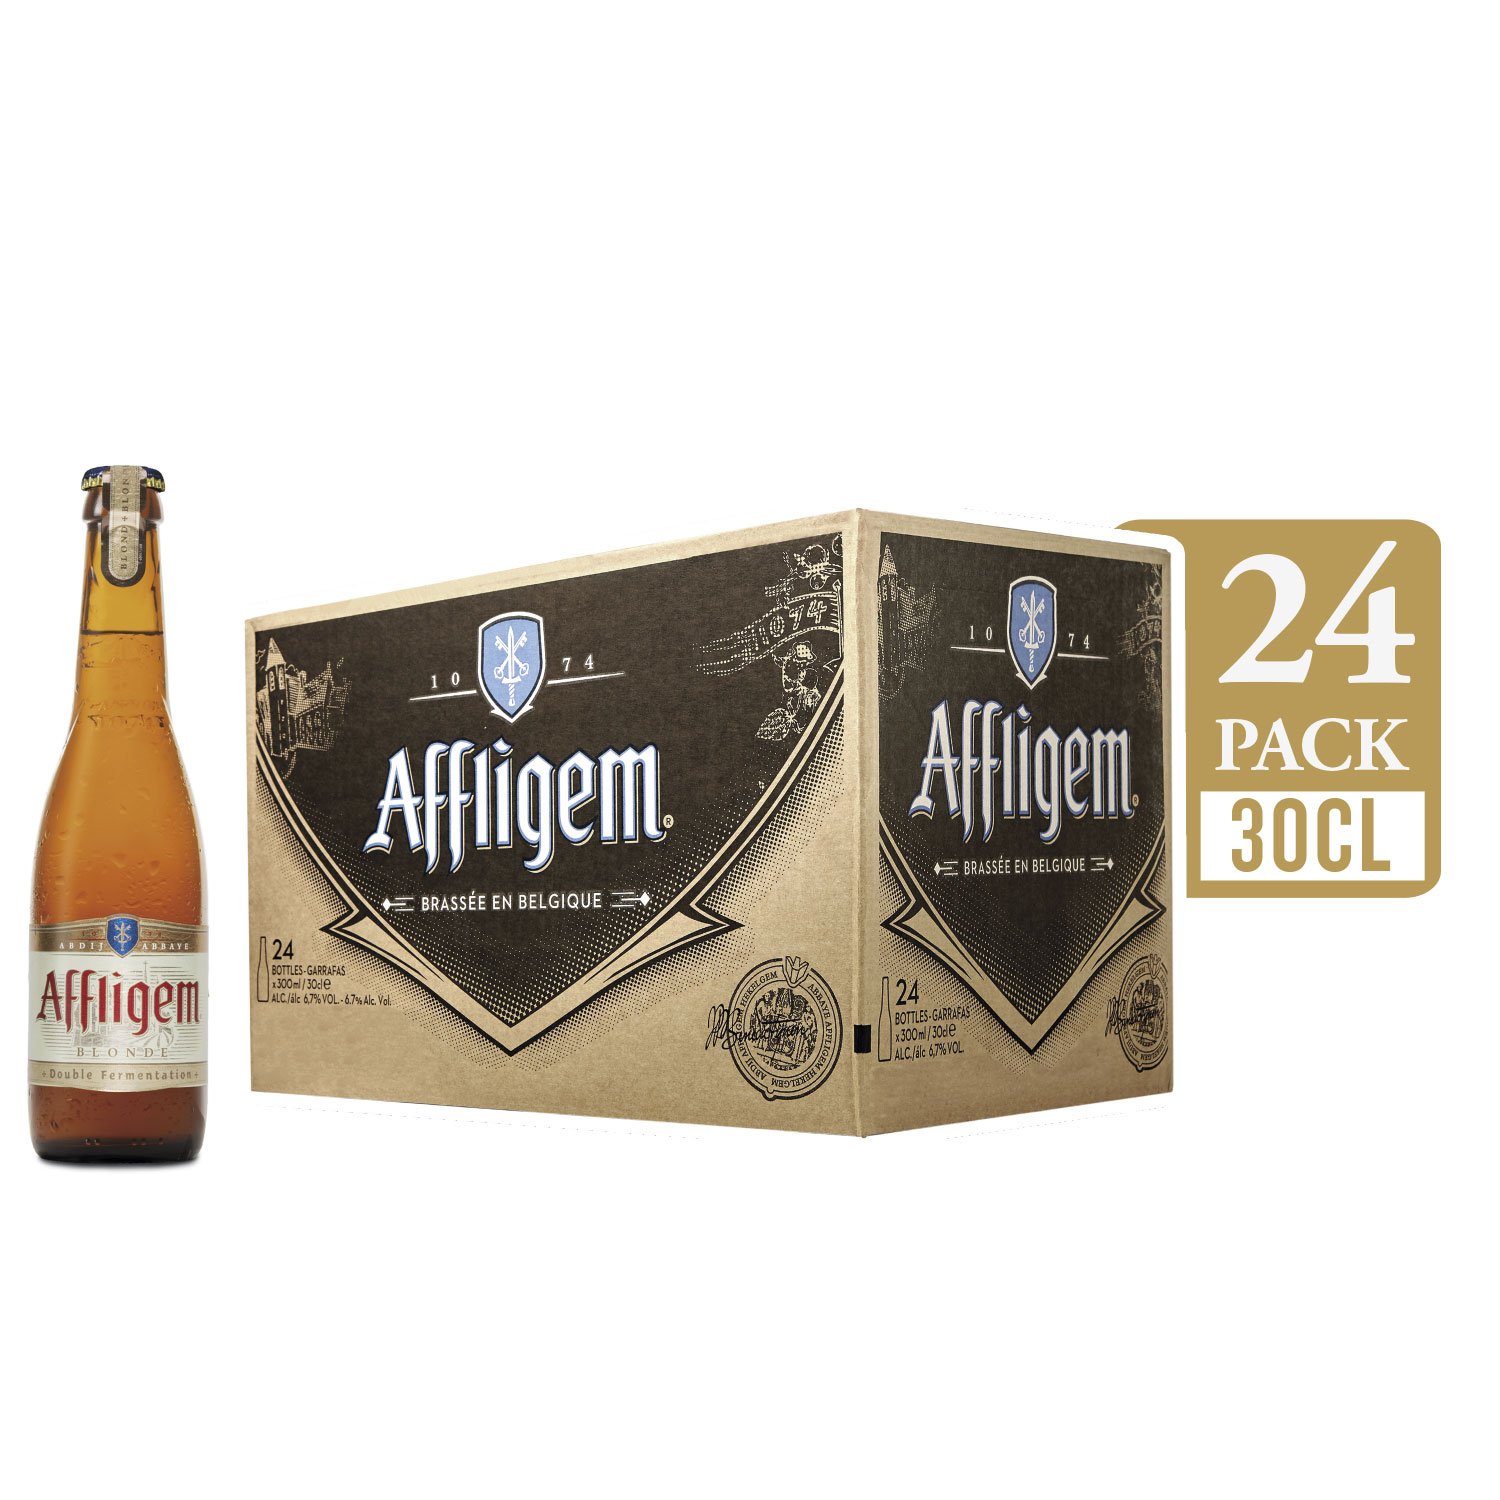 24 botellas de cerveza Affligem Blond solo 24,4€